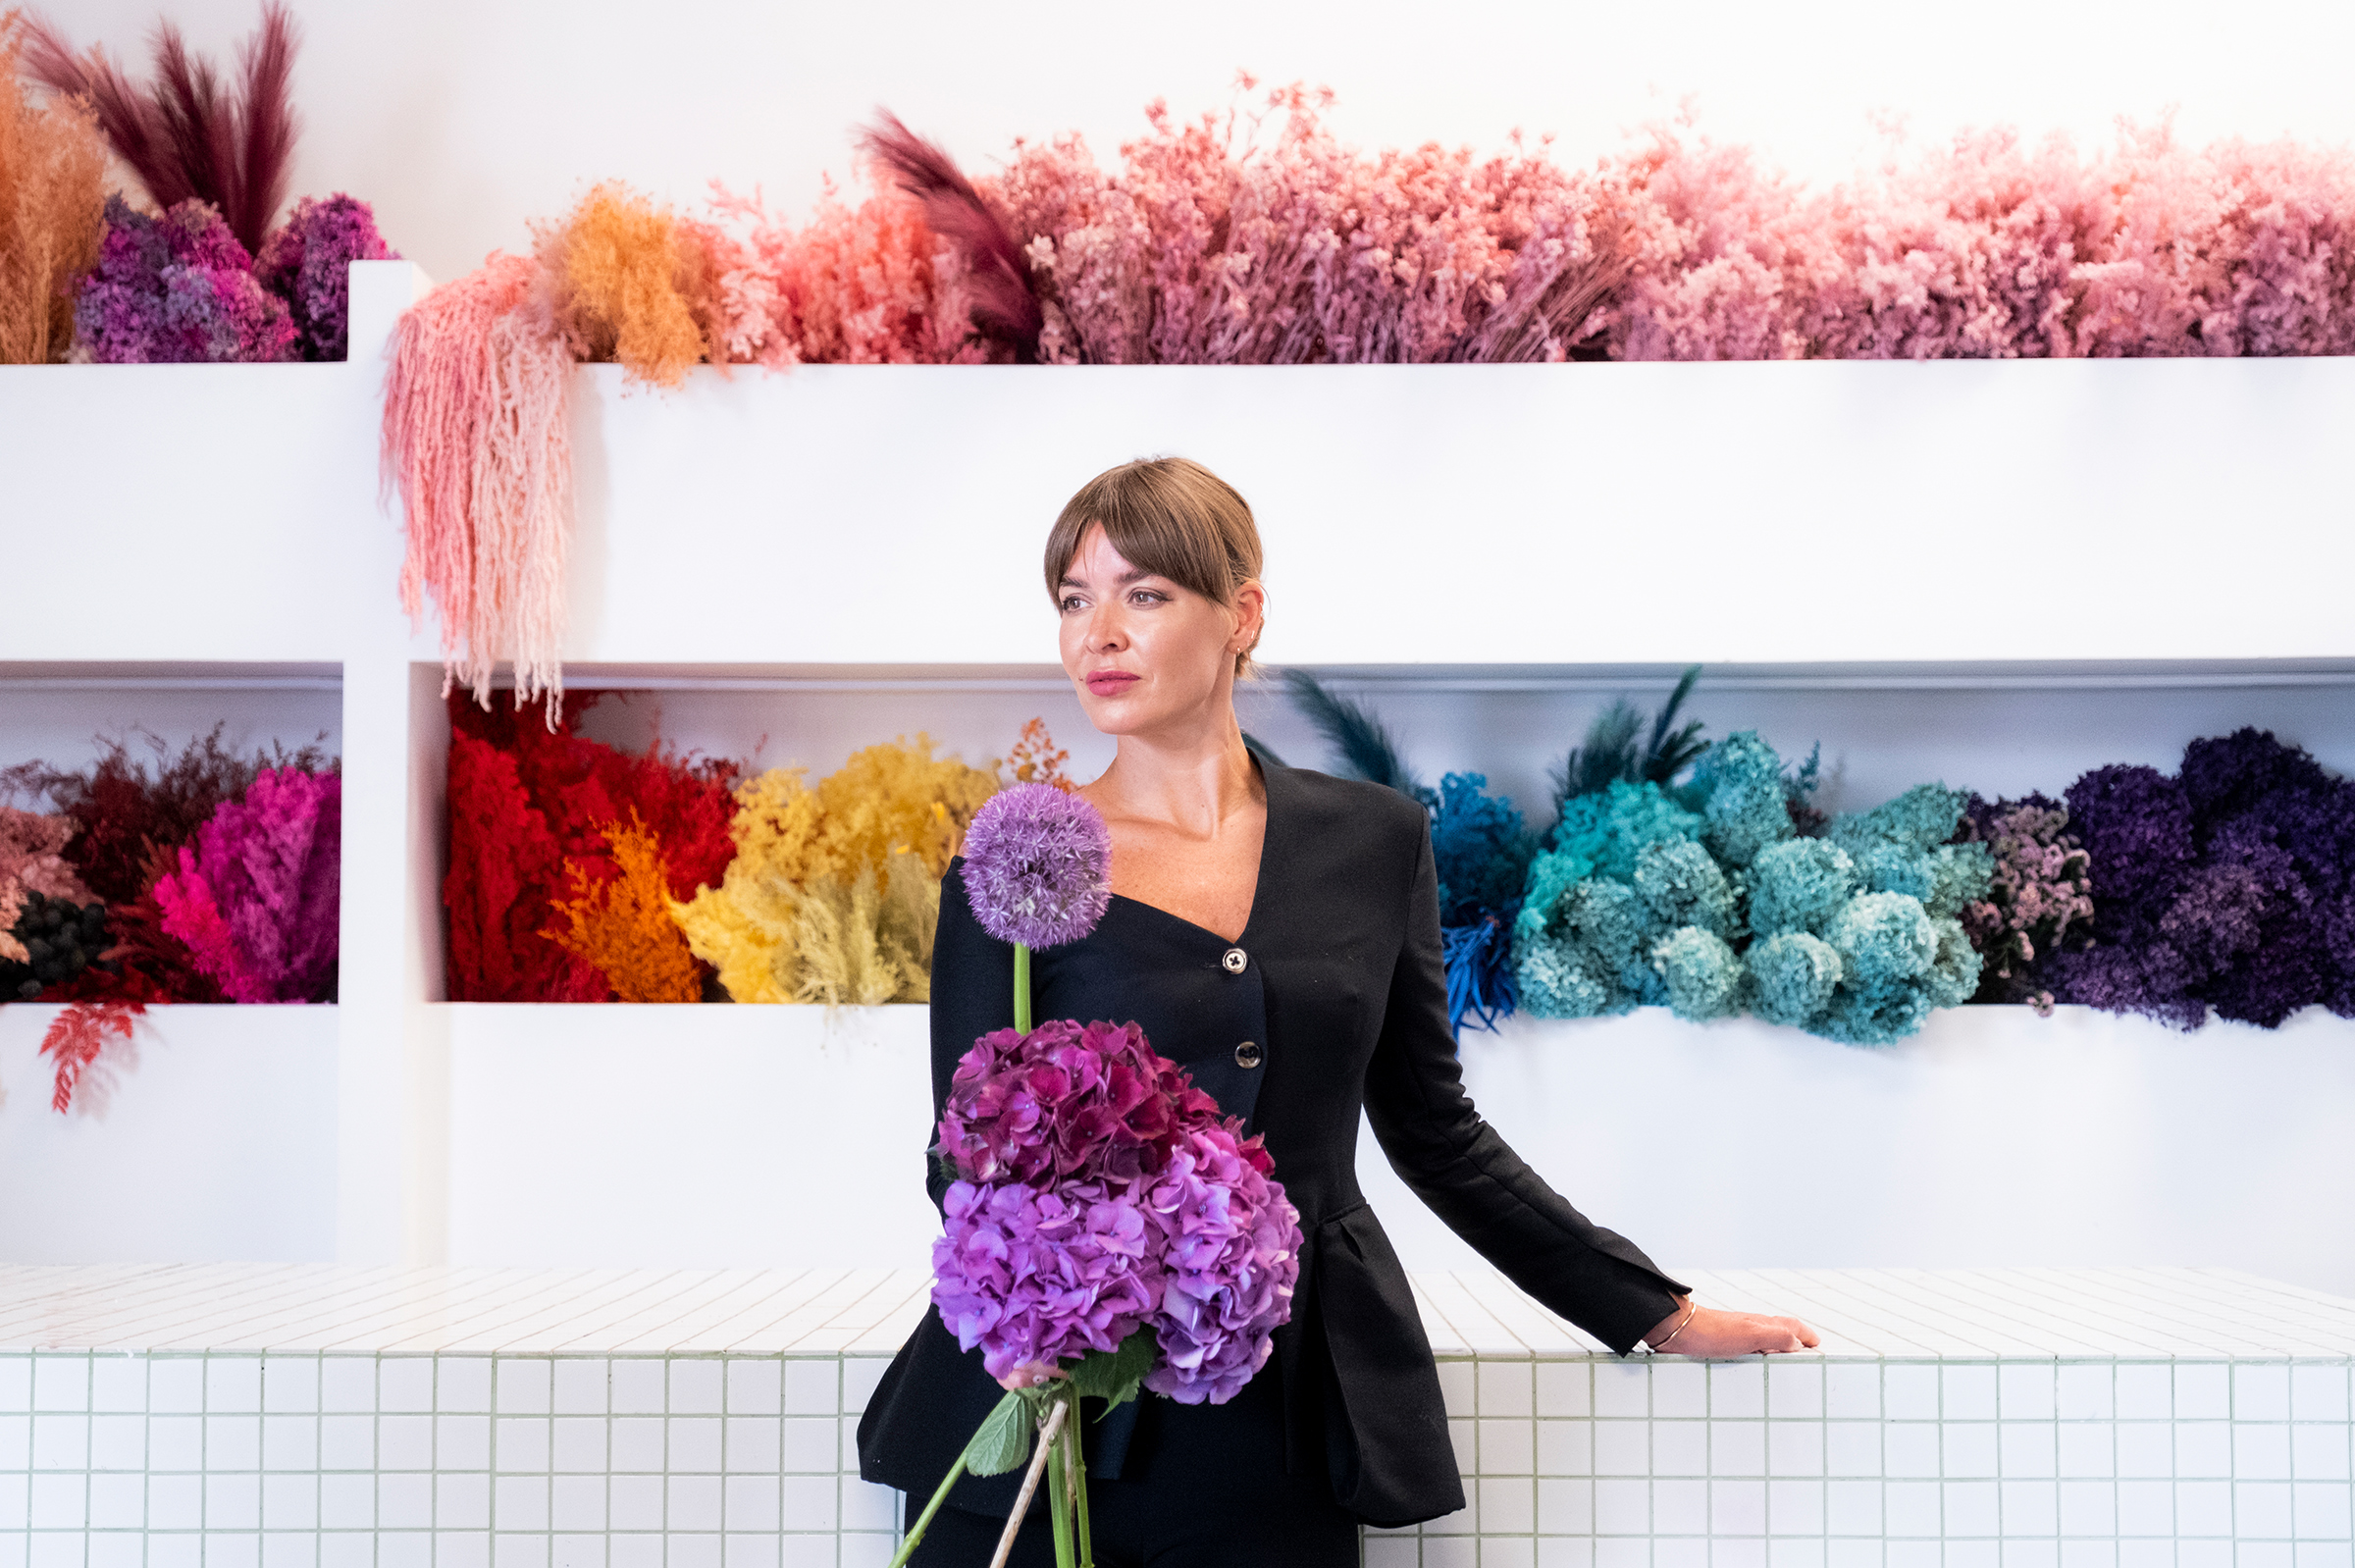 Natalia Shustova’s floral studio Goshá carved out a creative niche in Dubai (Natalie Naccache for TIME)